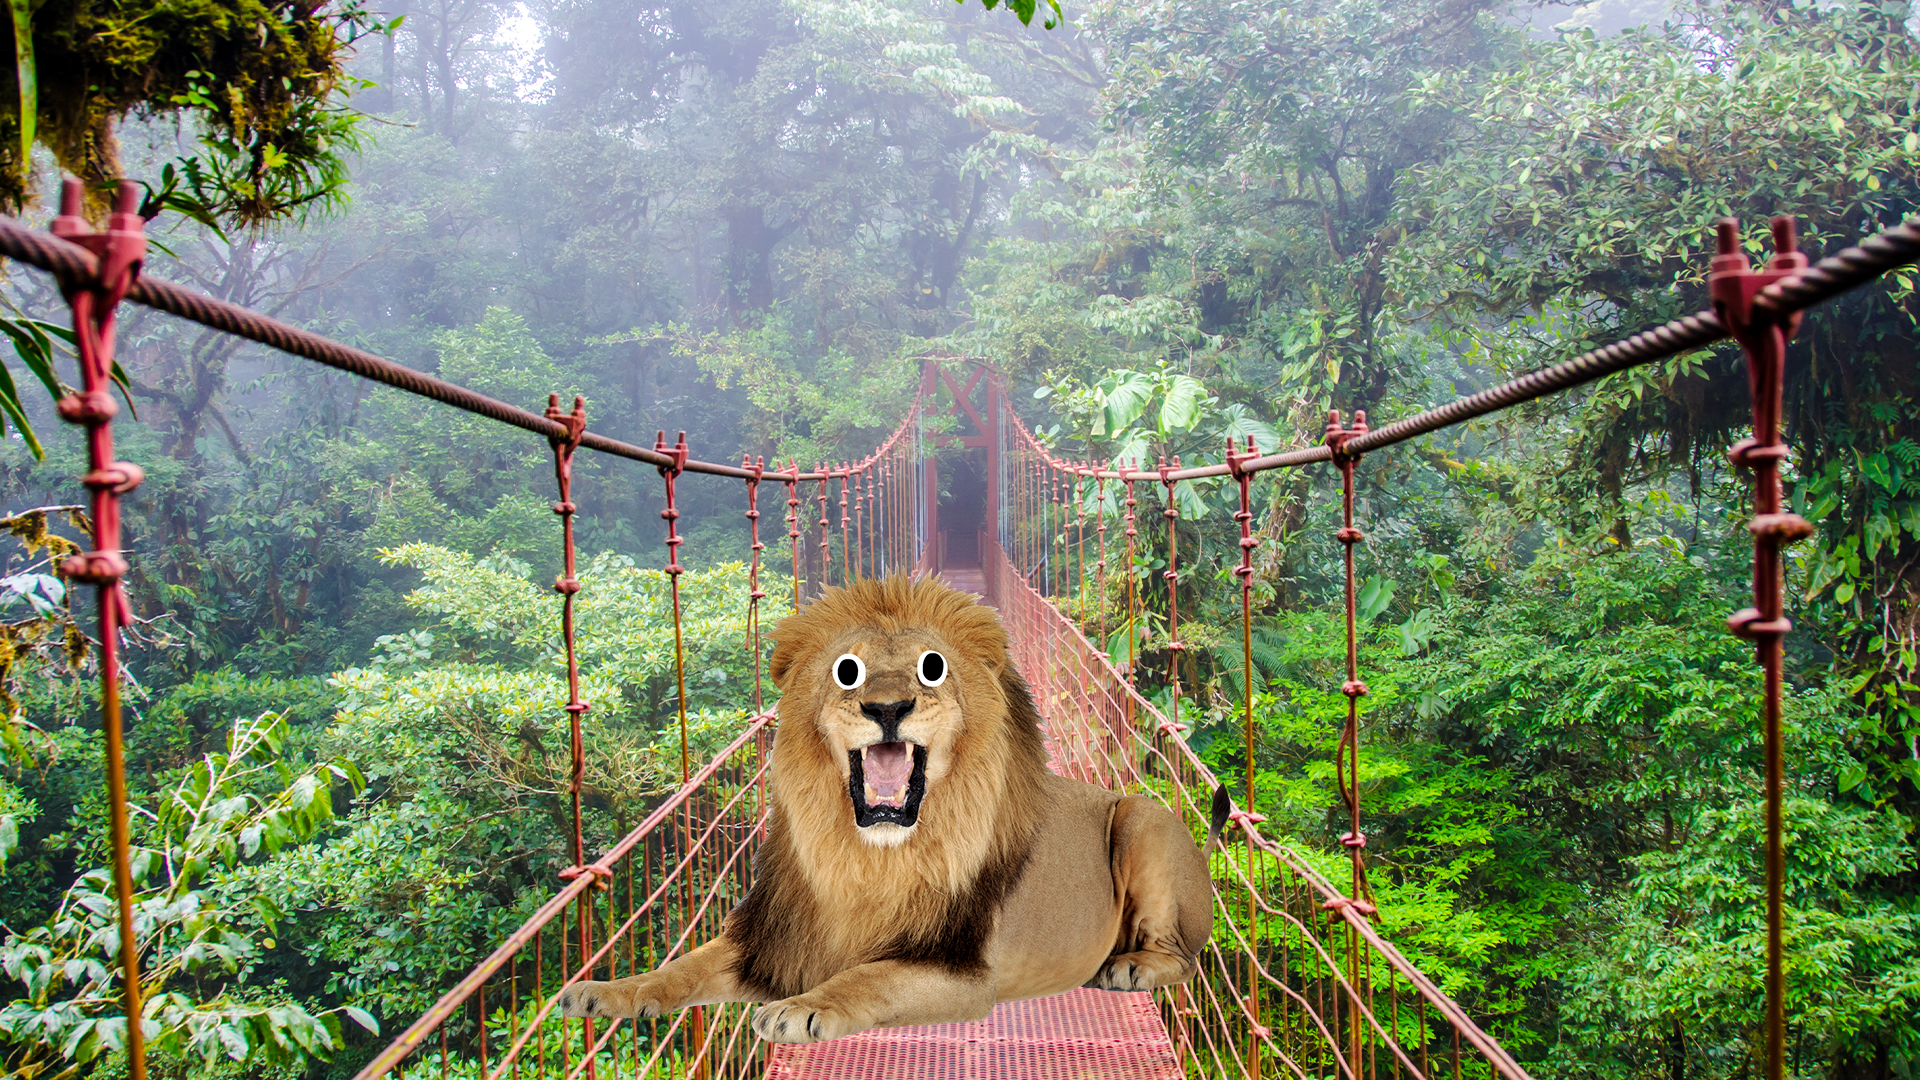 Jungle scene with Beano lion